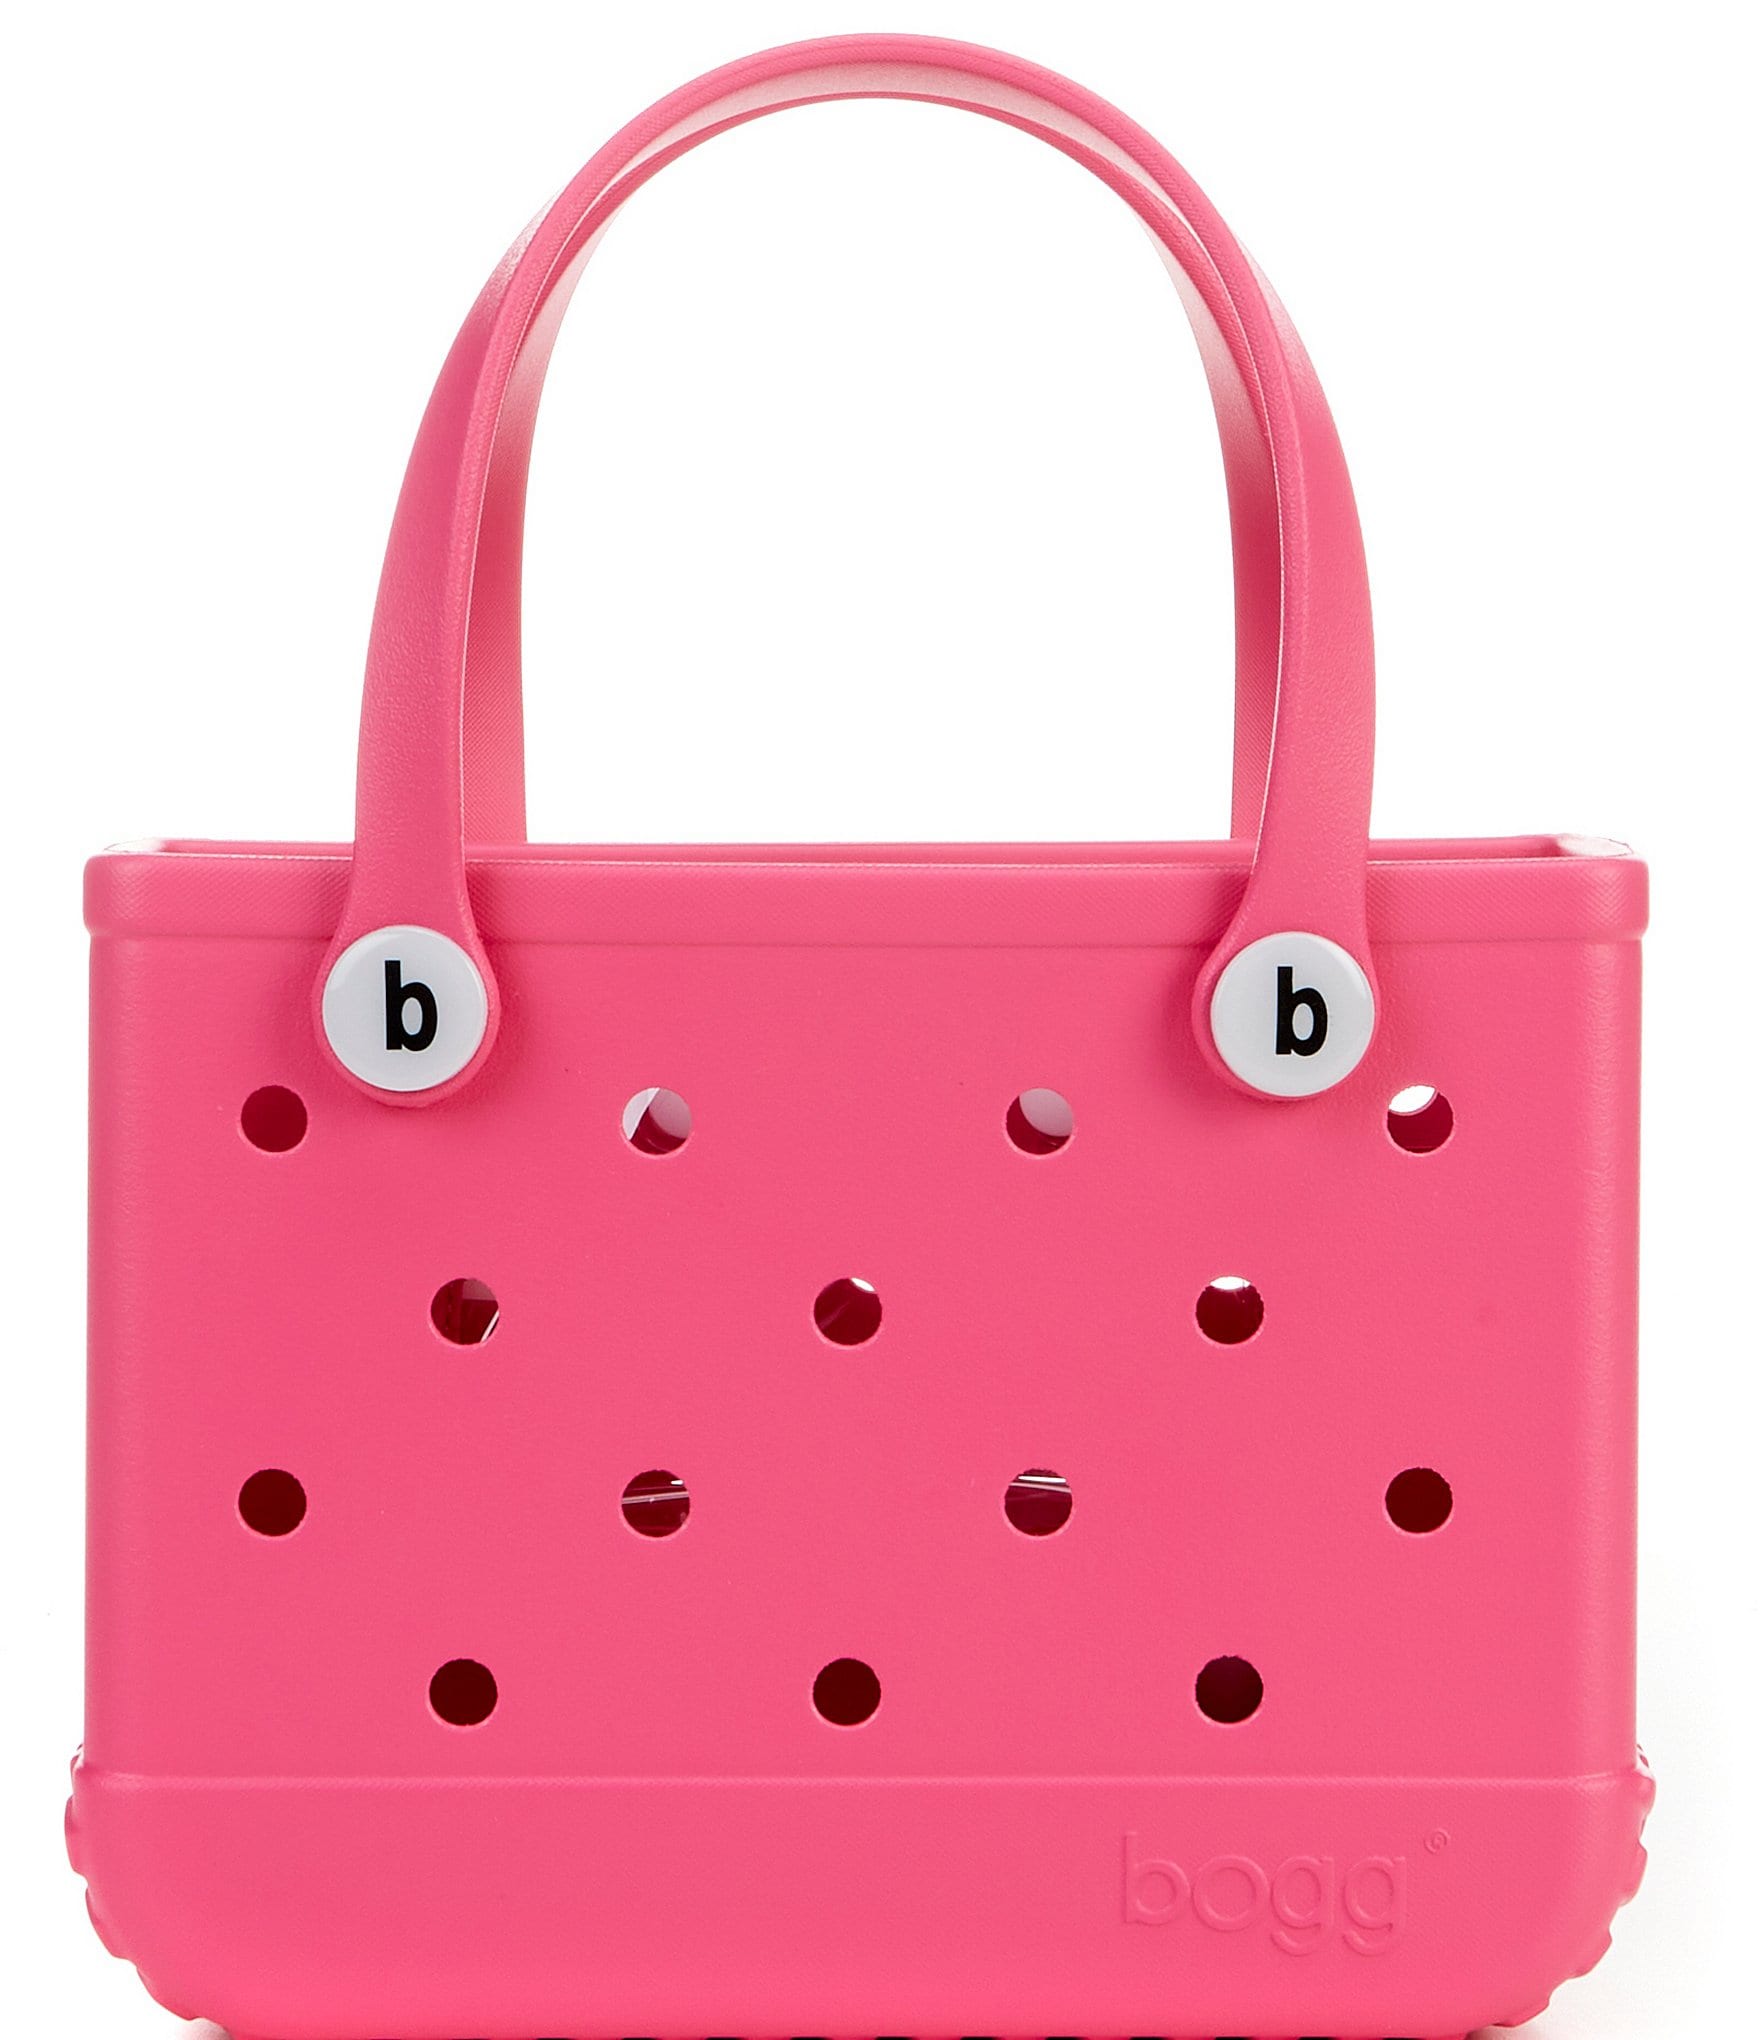 bogg bag haute pink original  Bags, Louis vuitton bag neverfull, Pink